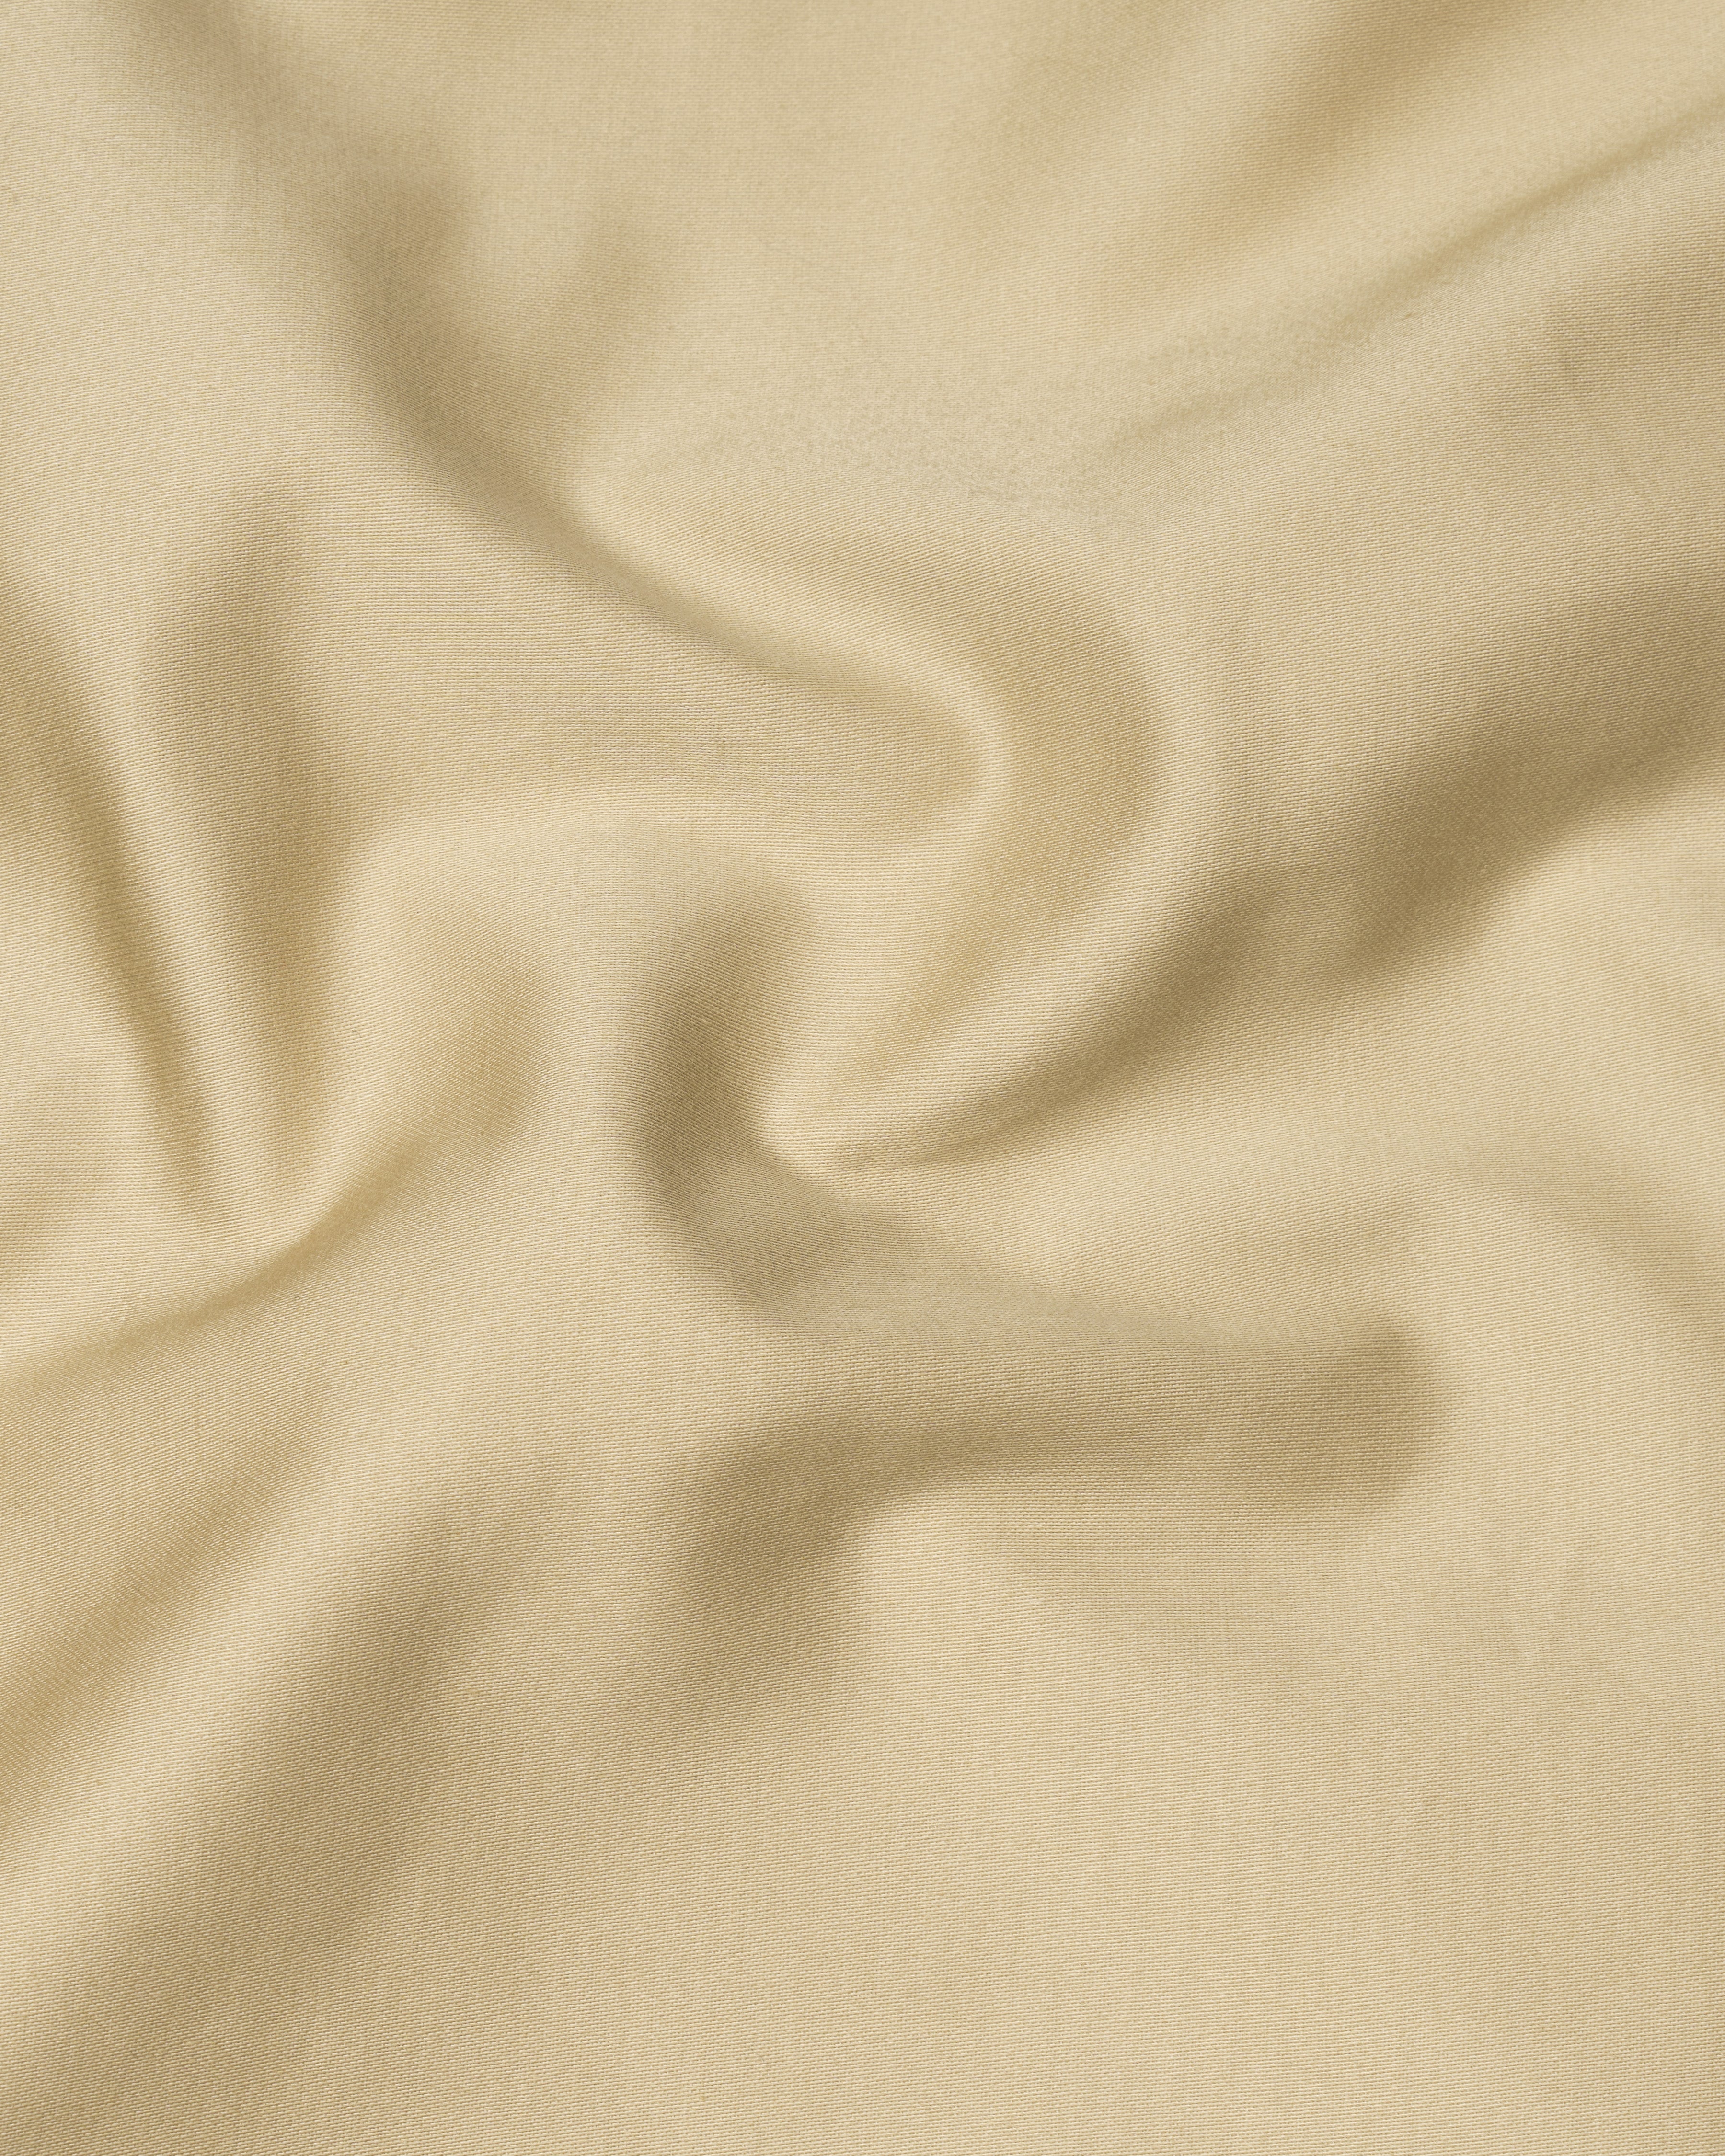 Pavlova Cream Solid Premium Cotton Nehru Jacket WC2649-36, WC2649-38, WC2649-40, WC2649-42, WC2649-44, WC2649-46, WC2649-48, WC2649-50, WC2649-52, WC2649-54, WC2649-56, WC2649-58, WC2649-60